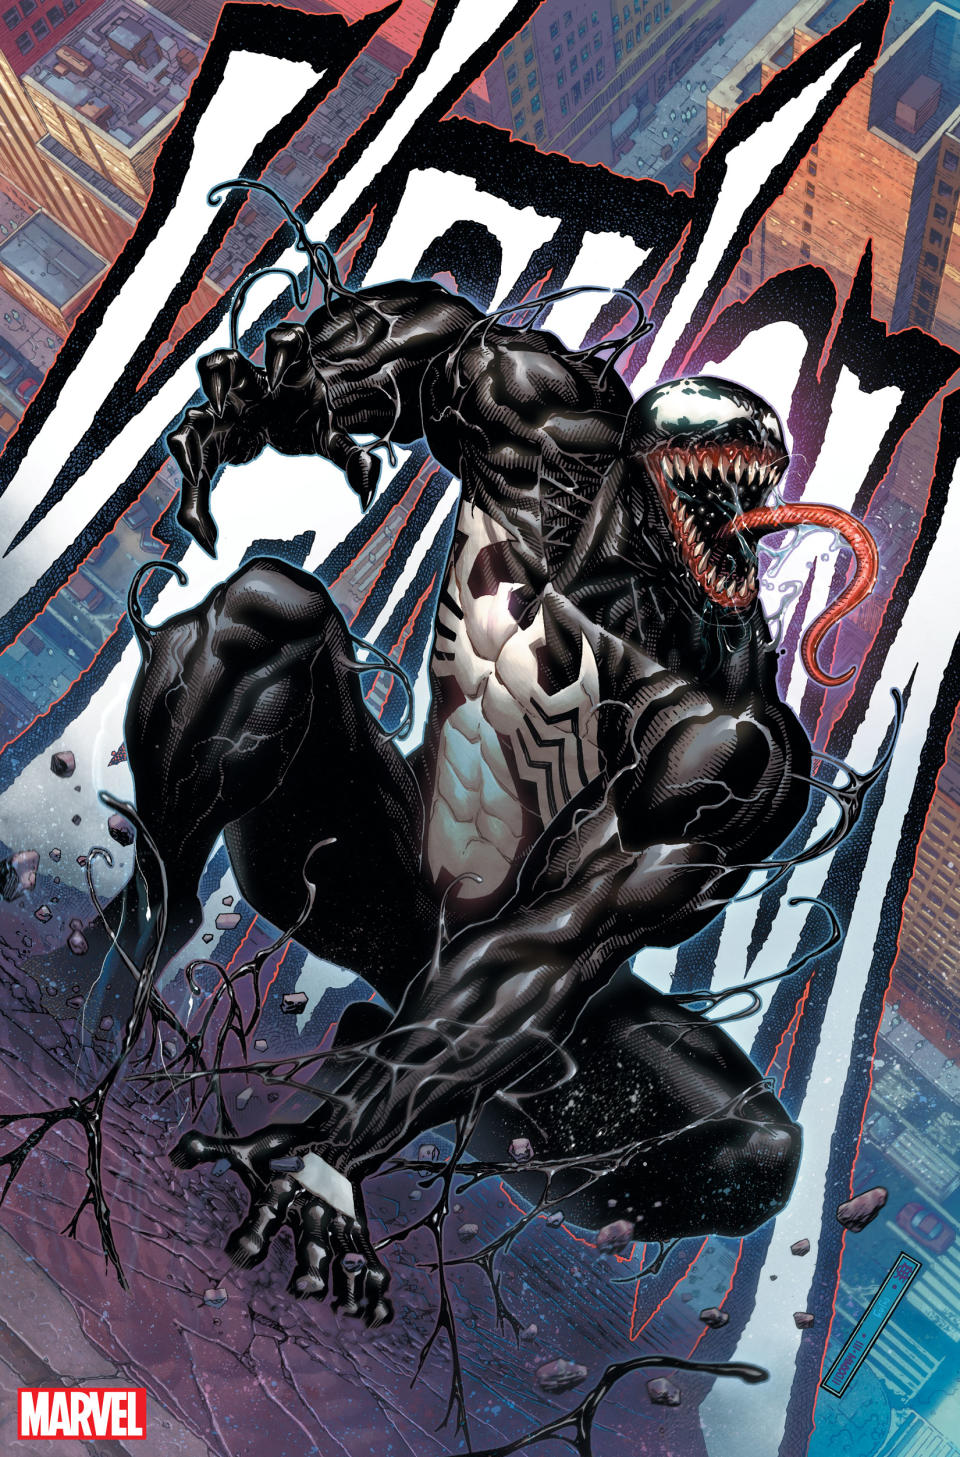 The Cheung variant of Venom #23